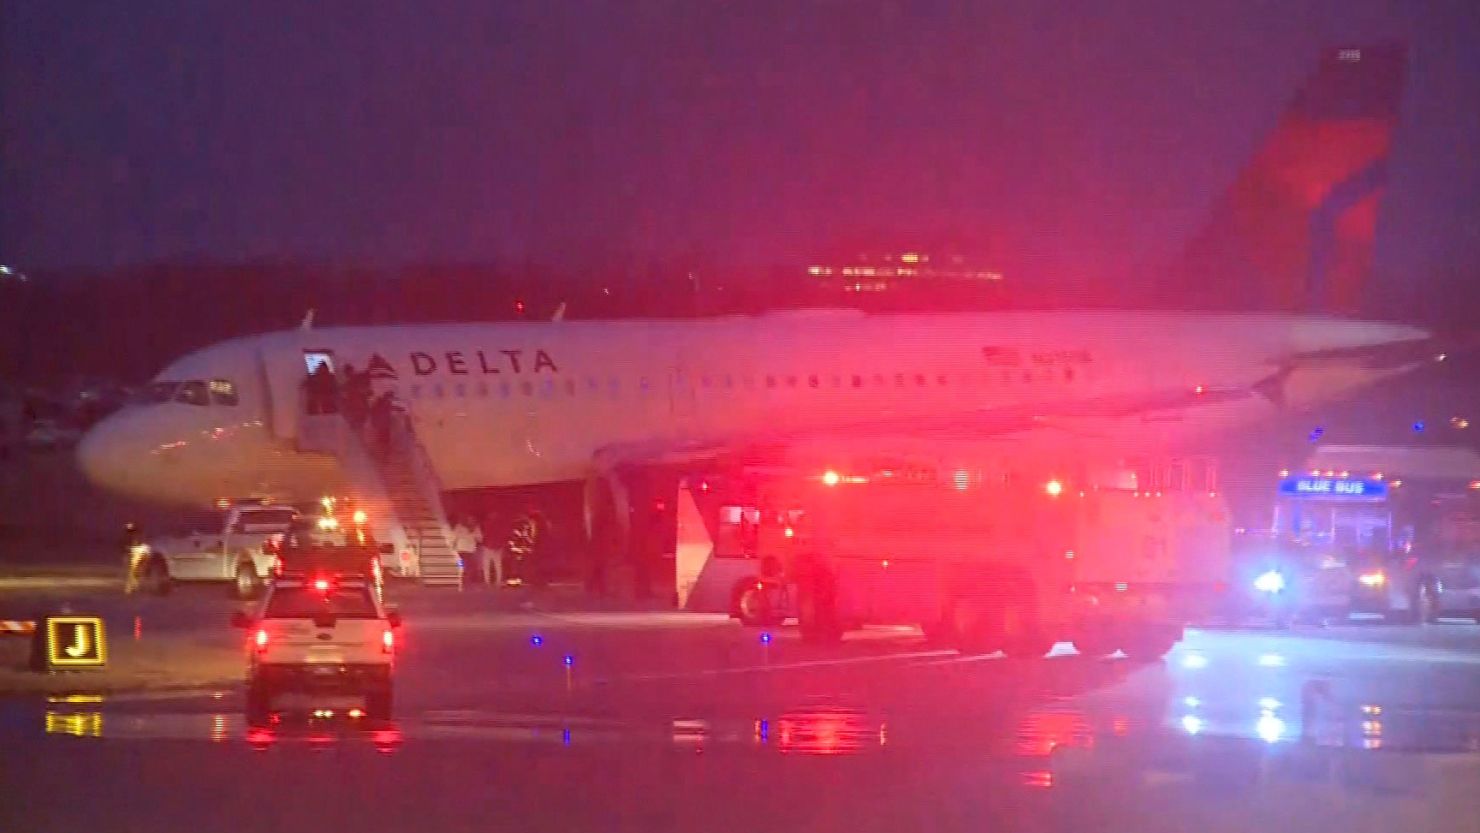 A Delta flight slid off the runway Friday at Kansas City International Airport, an airport spokesman said.